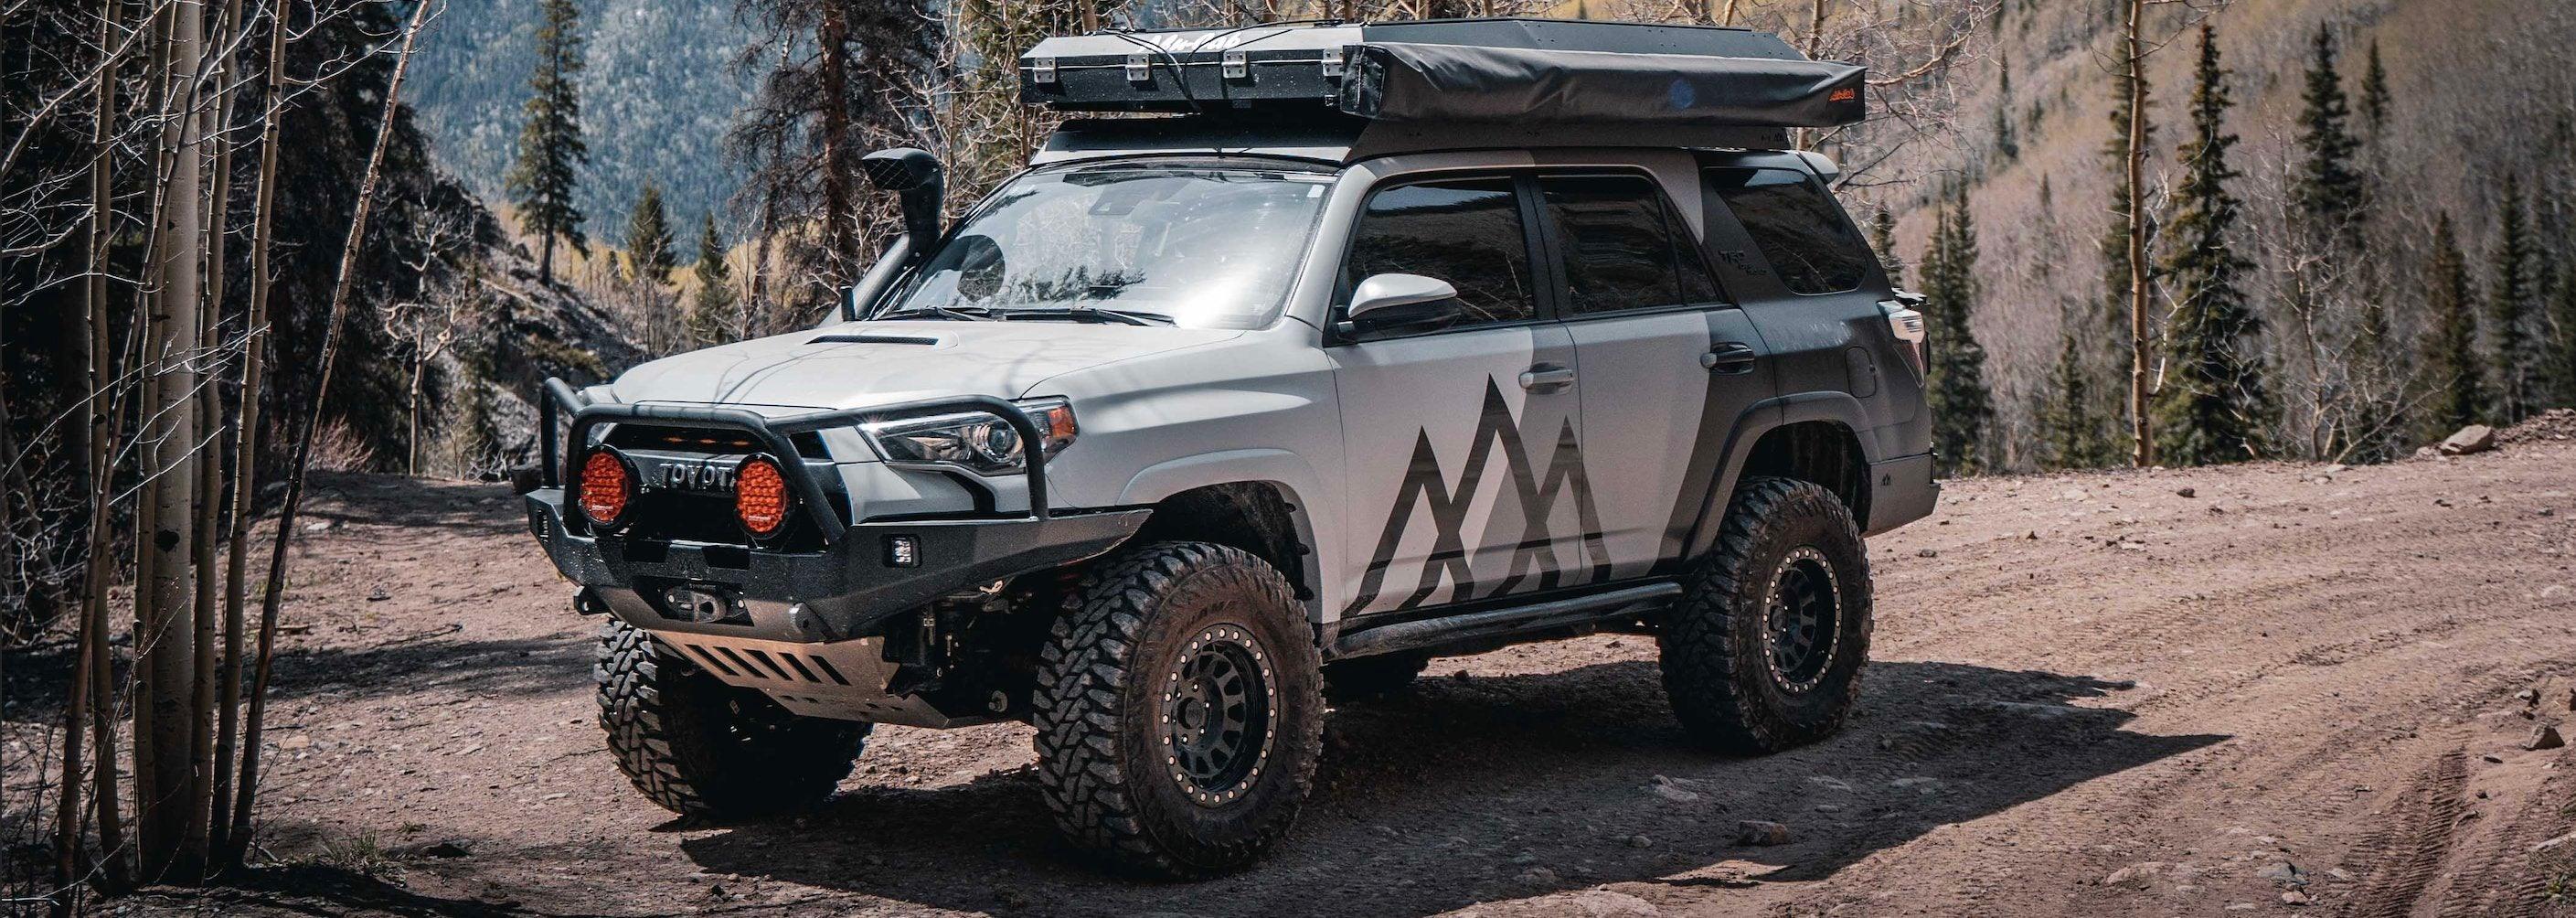 Toyota 4Runner Off-Road Accessories - Backwoods Adventure Mods